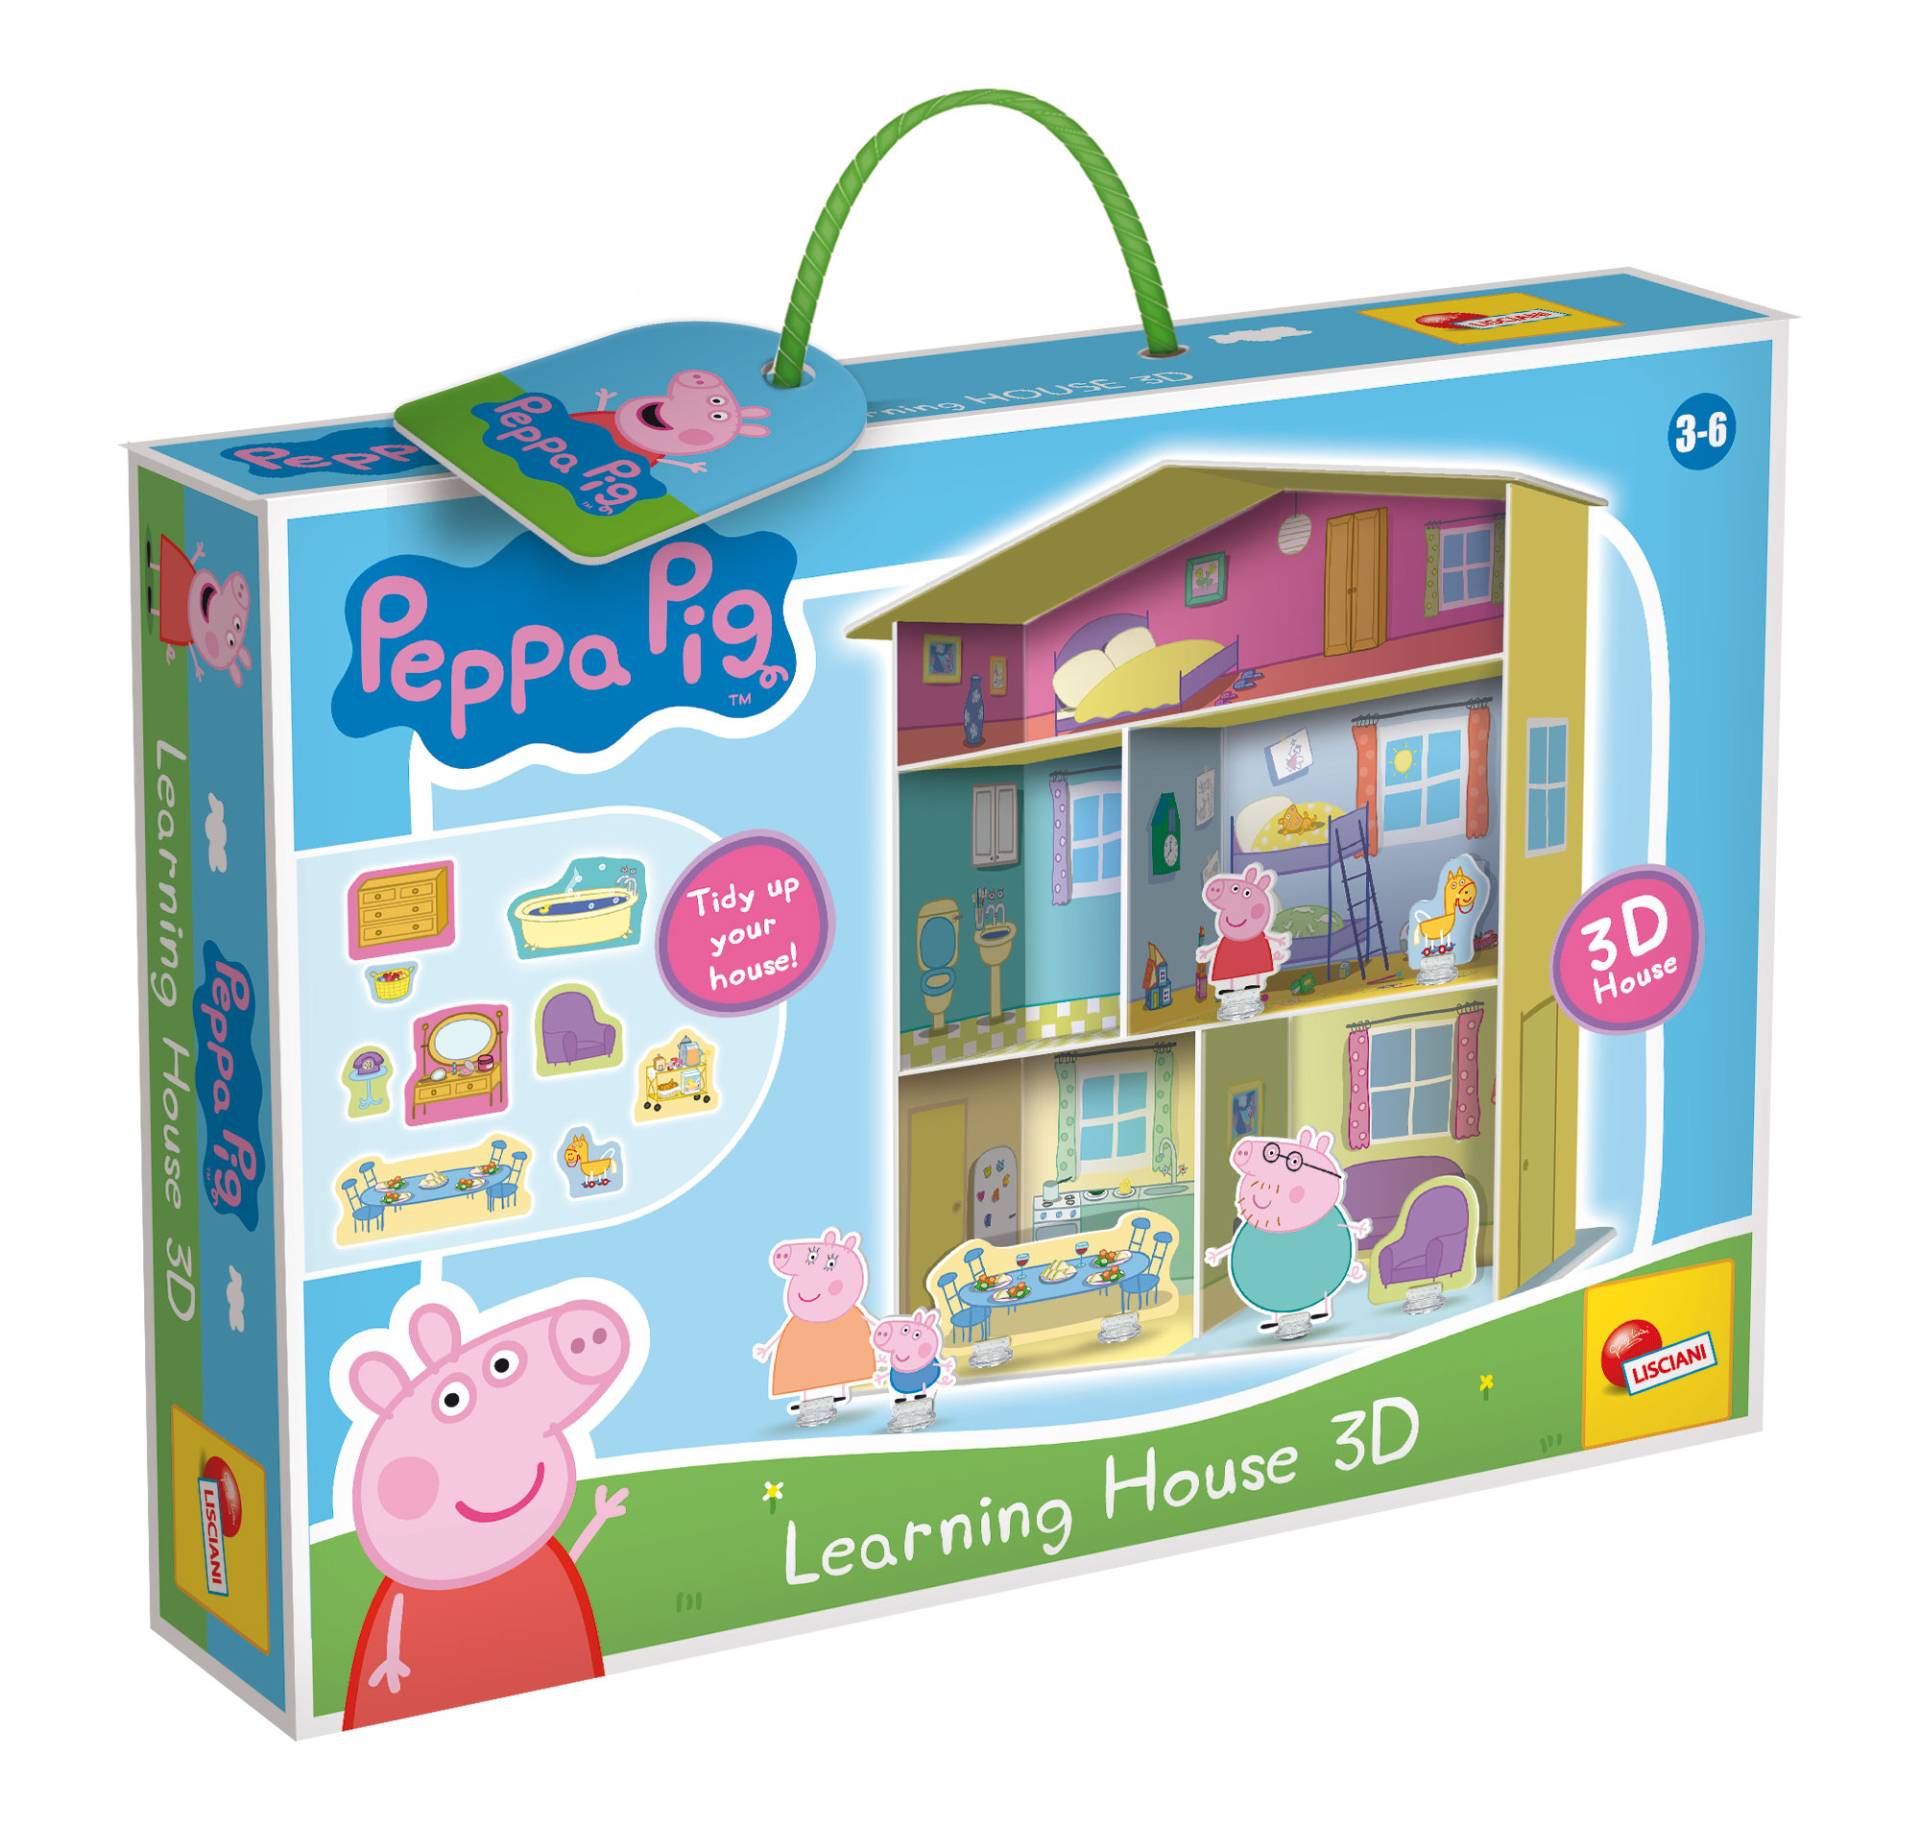 Foto 1 des Spiels PEPPA PIG LEARNING HOUSE 3D